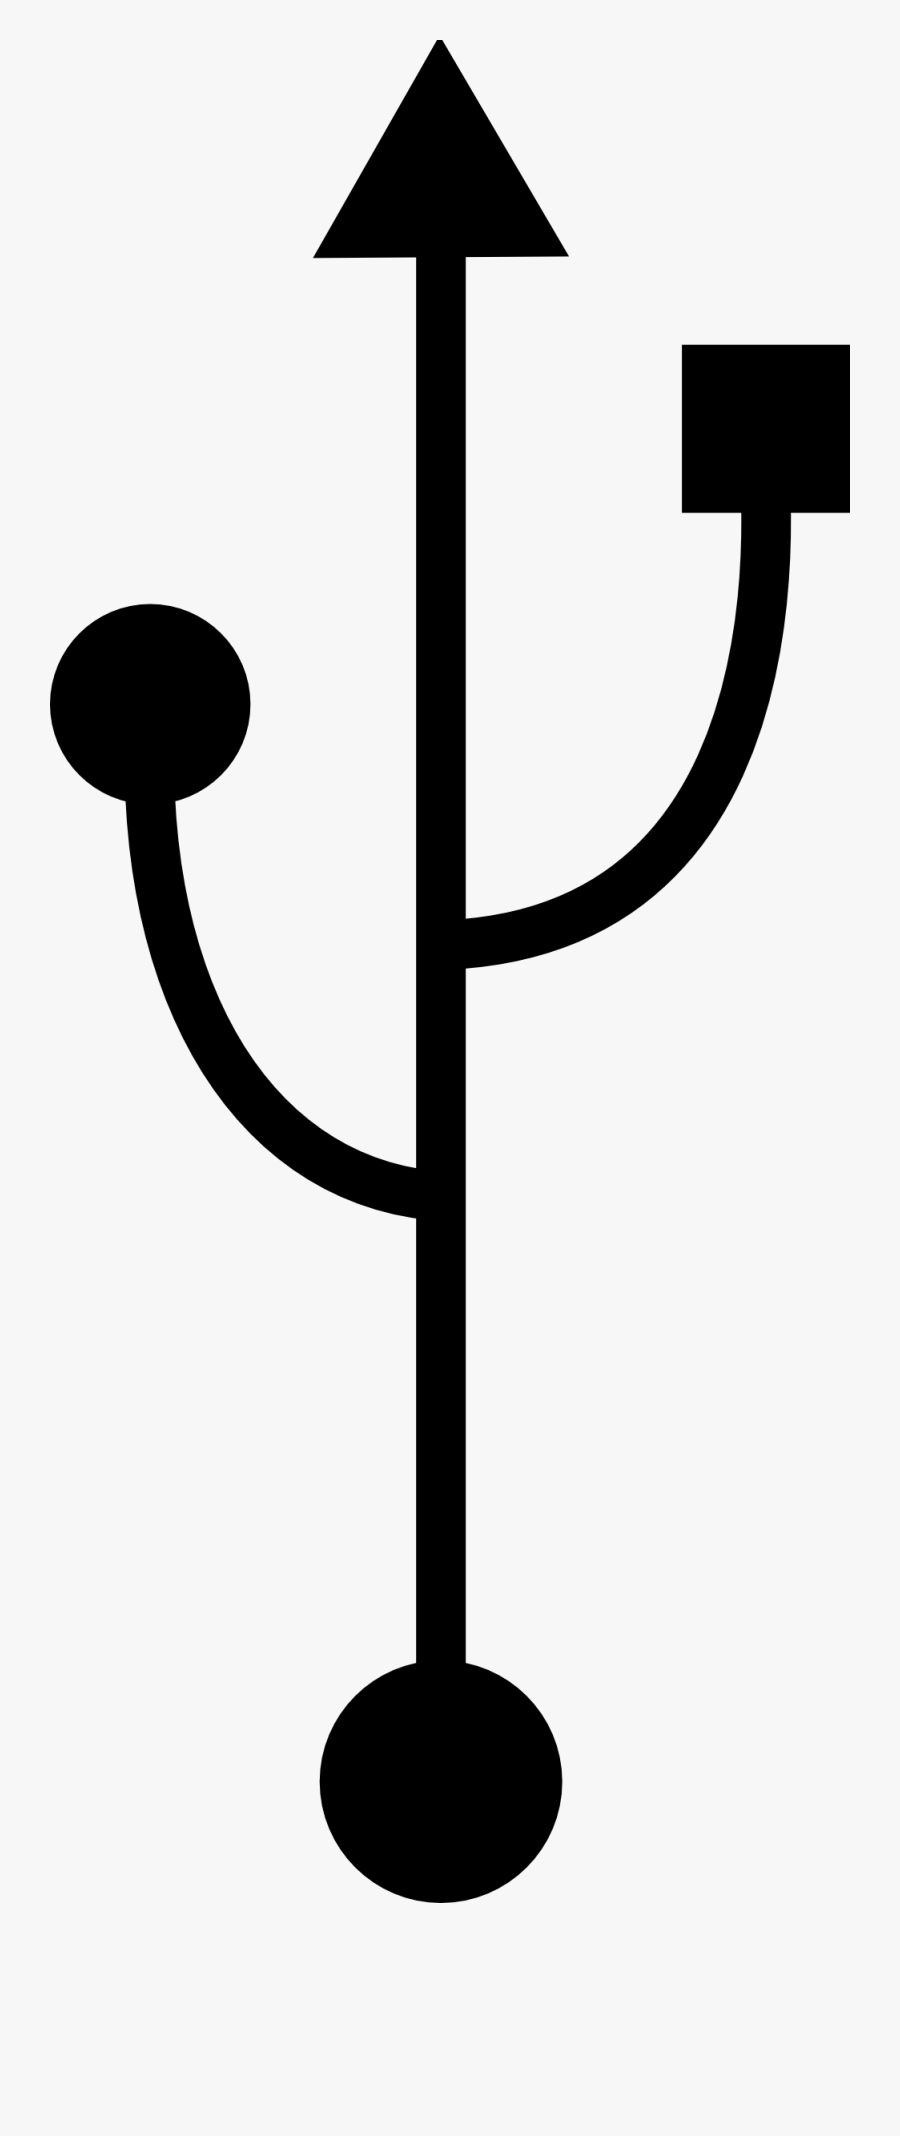 Usb Device Symbol Black White Line Art Coloring - Usb Symbol Png, Transparent Clipart